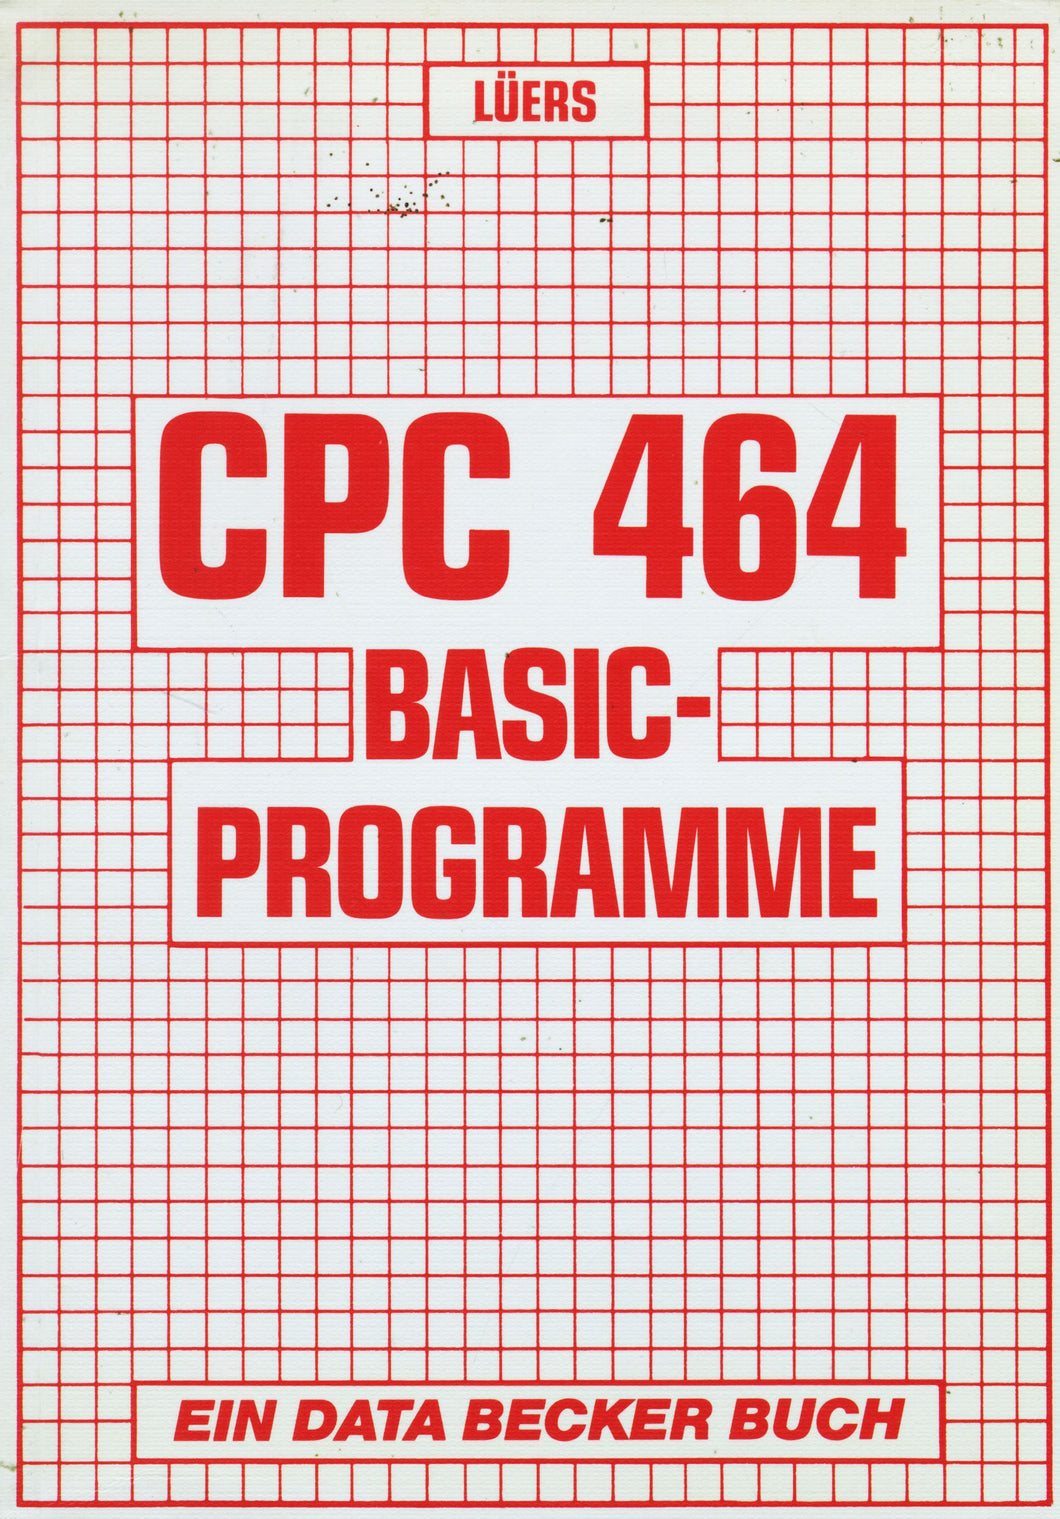 CPC 464 BASIC Programme